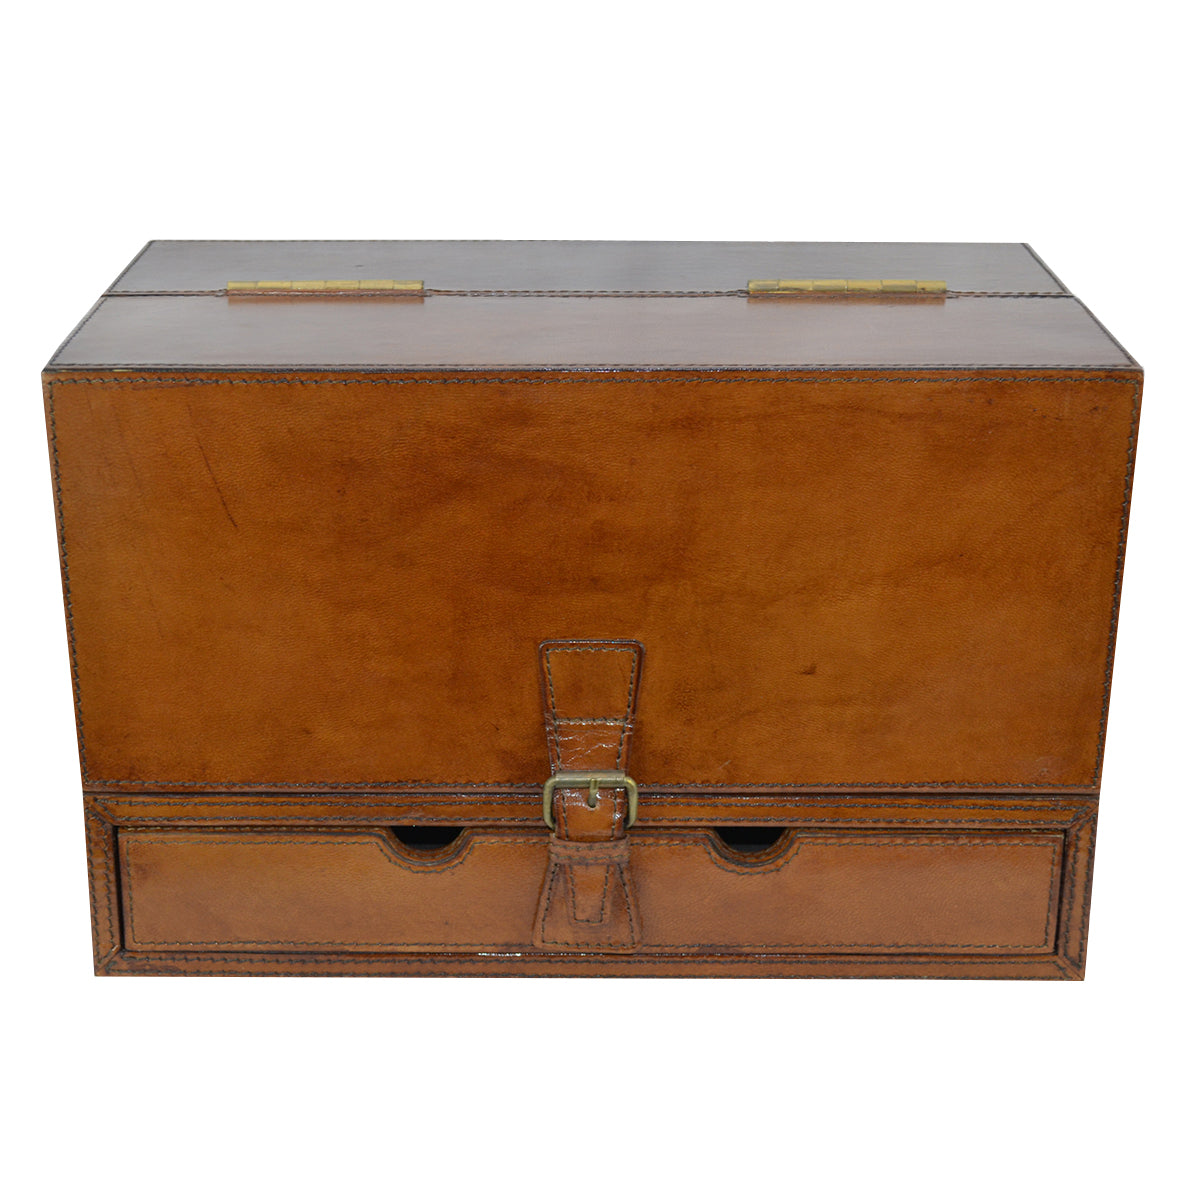 Tan Leather Stationery Box